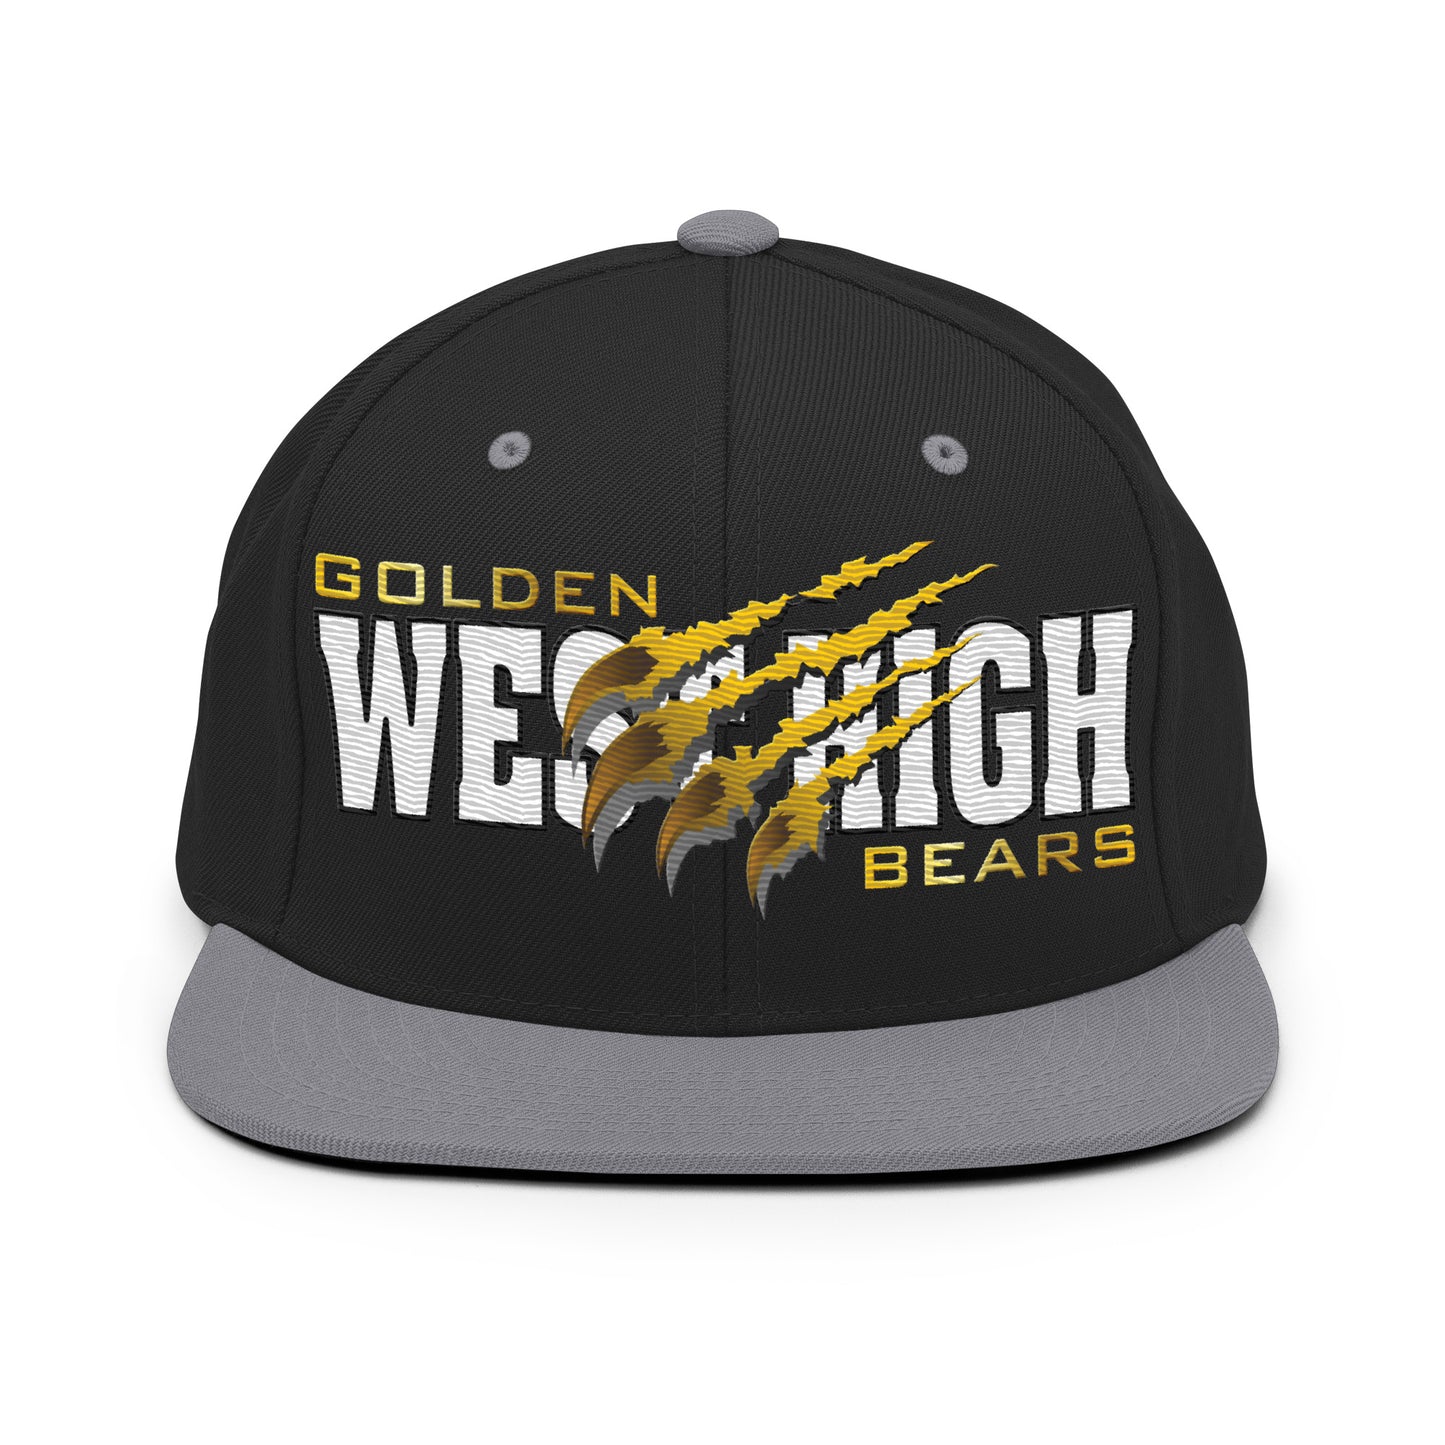 BWHS Snapback Hat - Golden Bears